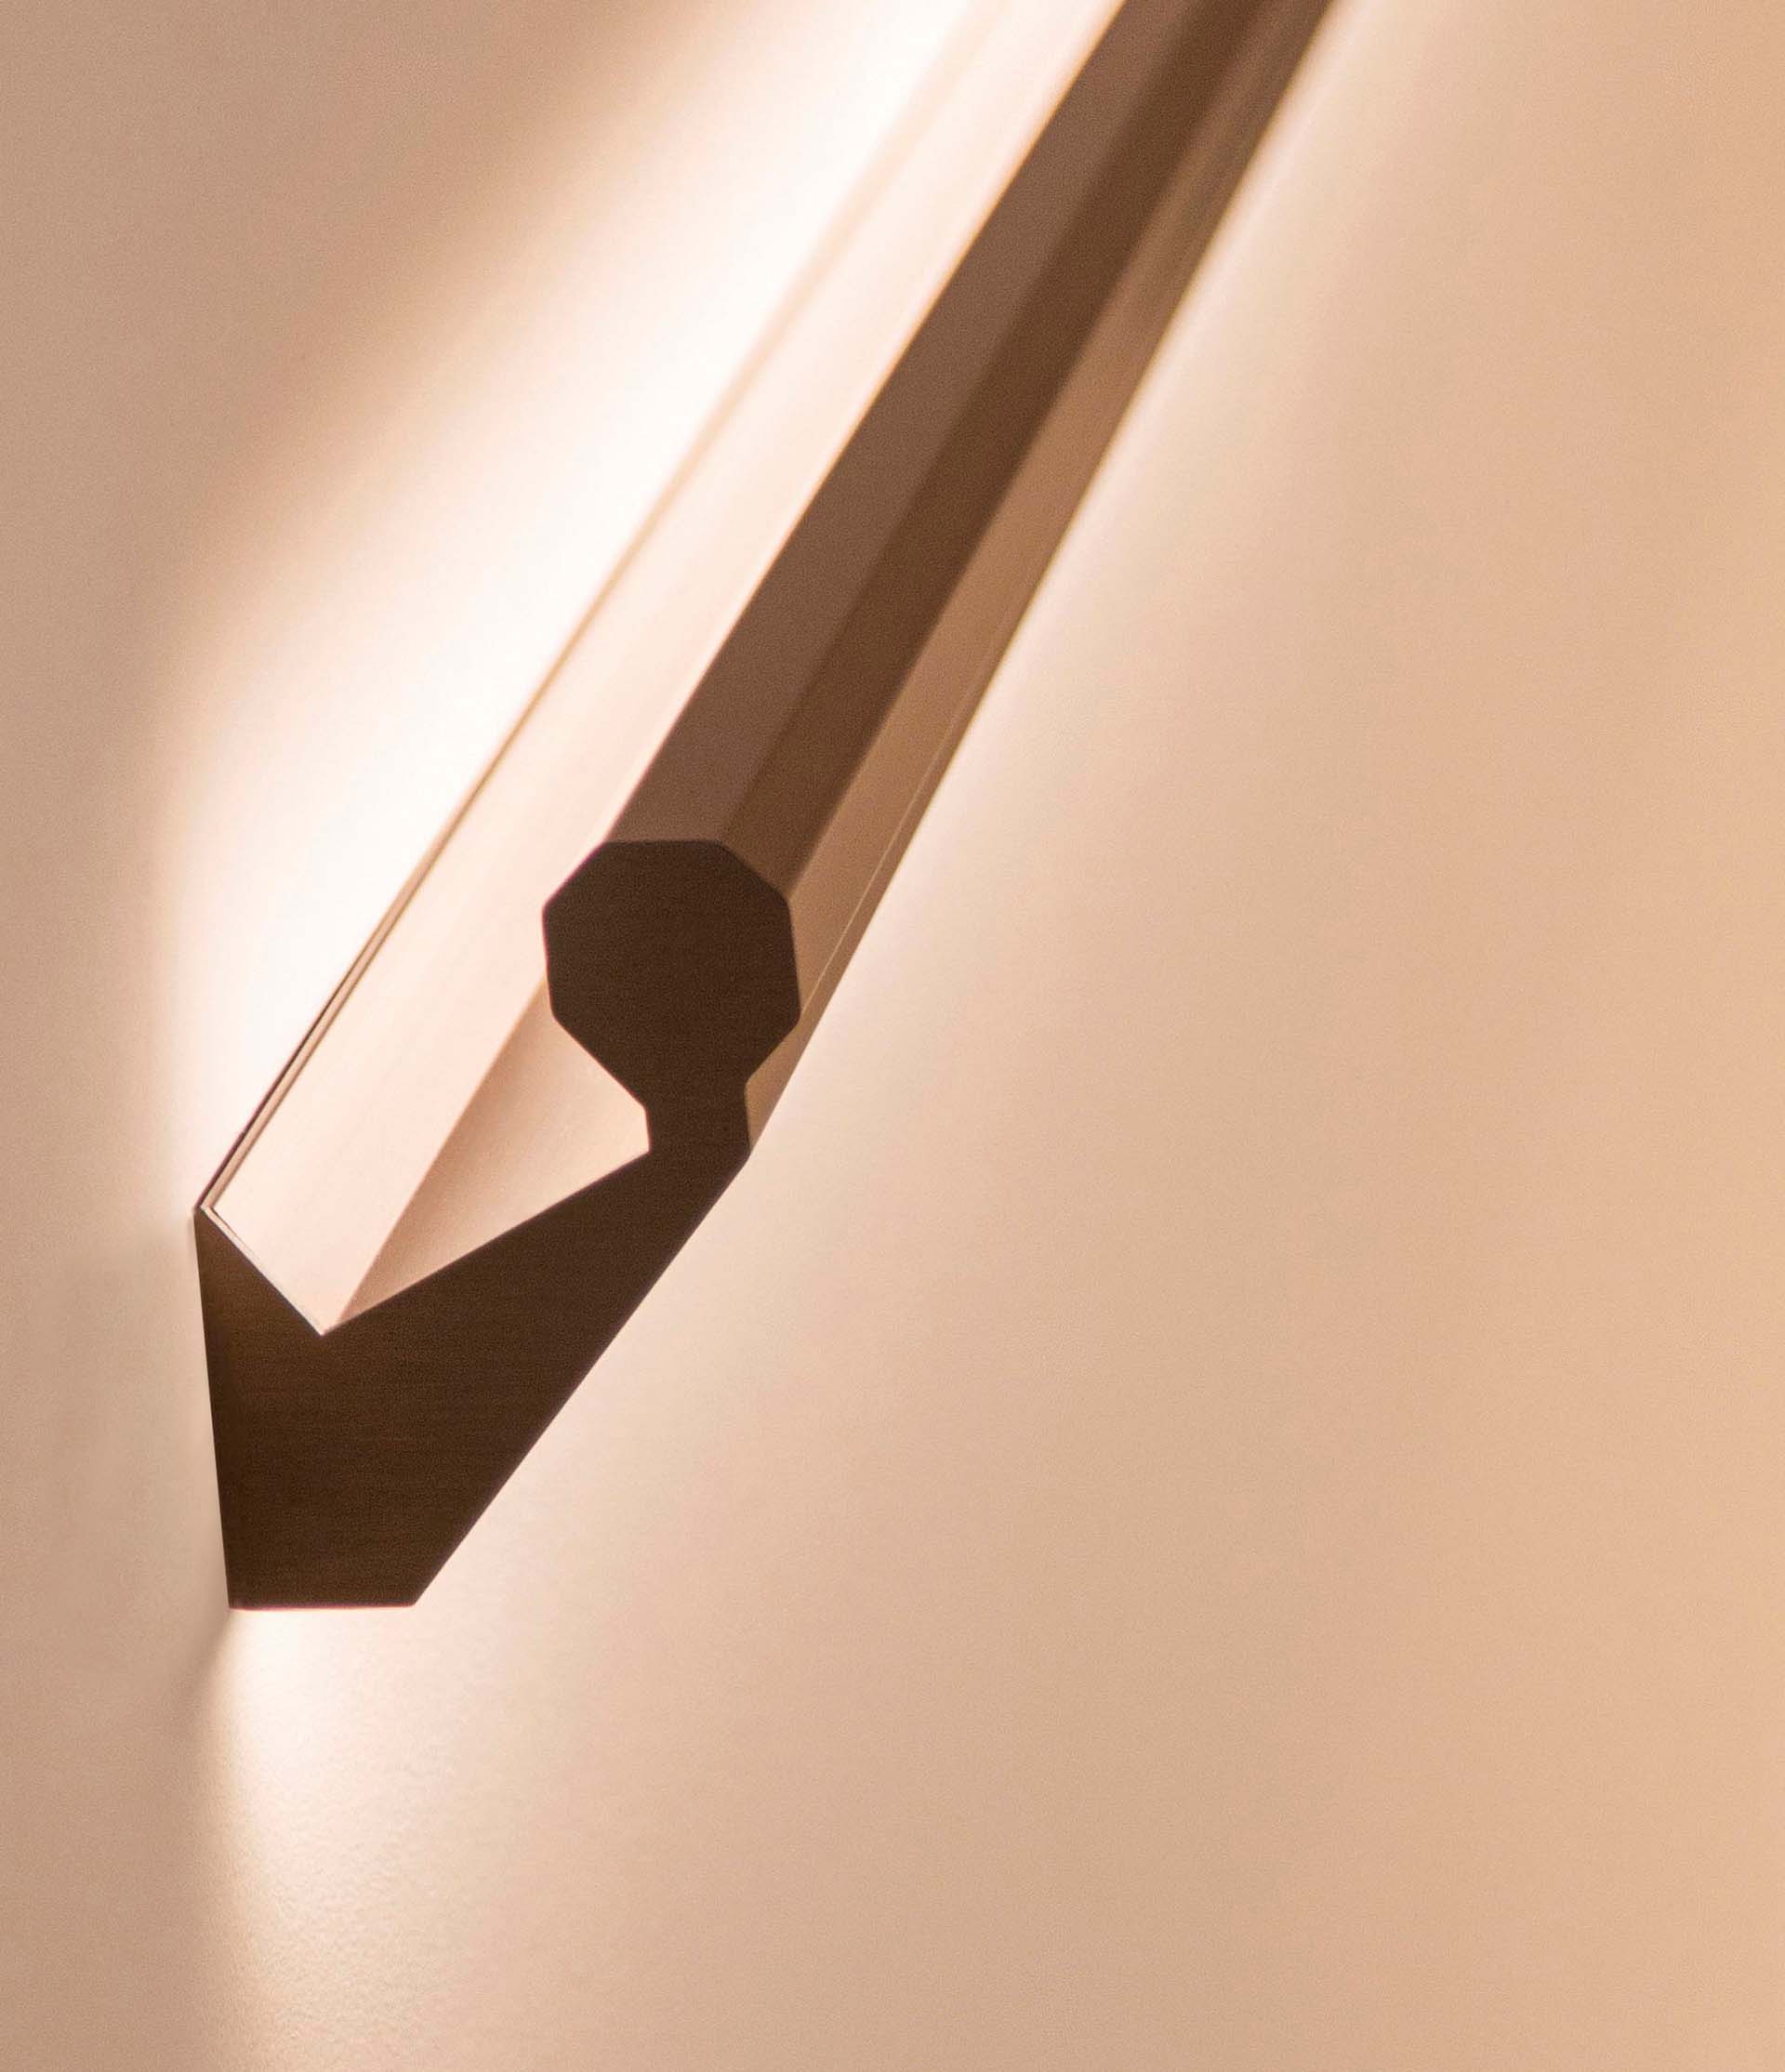 A minimalist handrail design that includes hidden LED lighting.